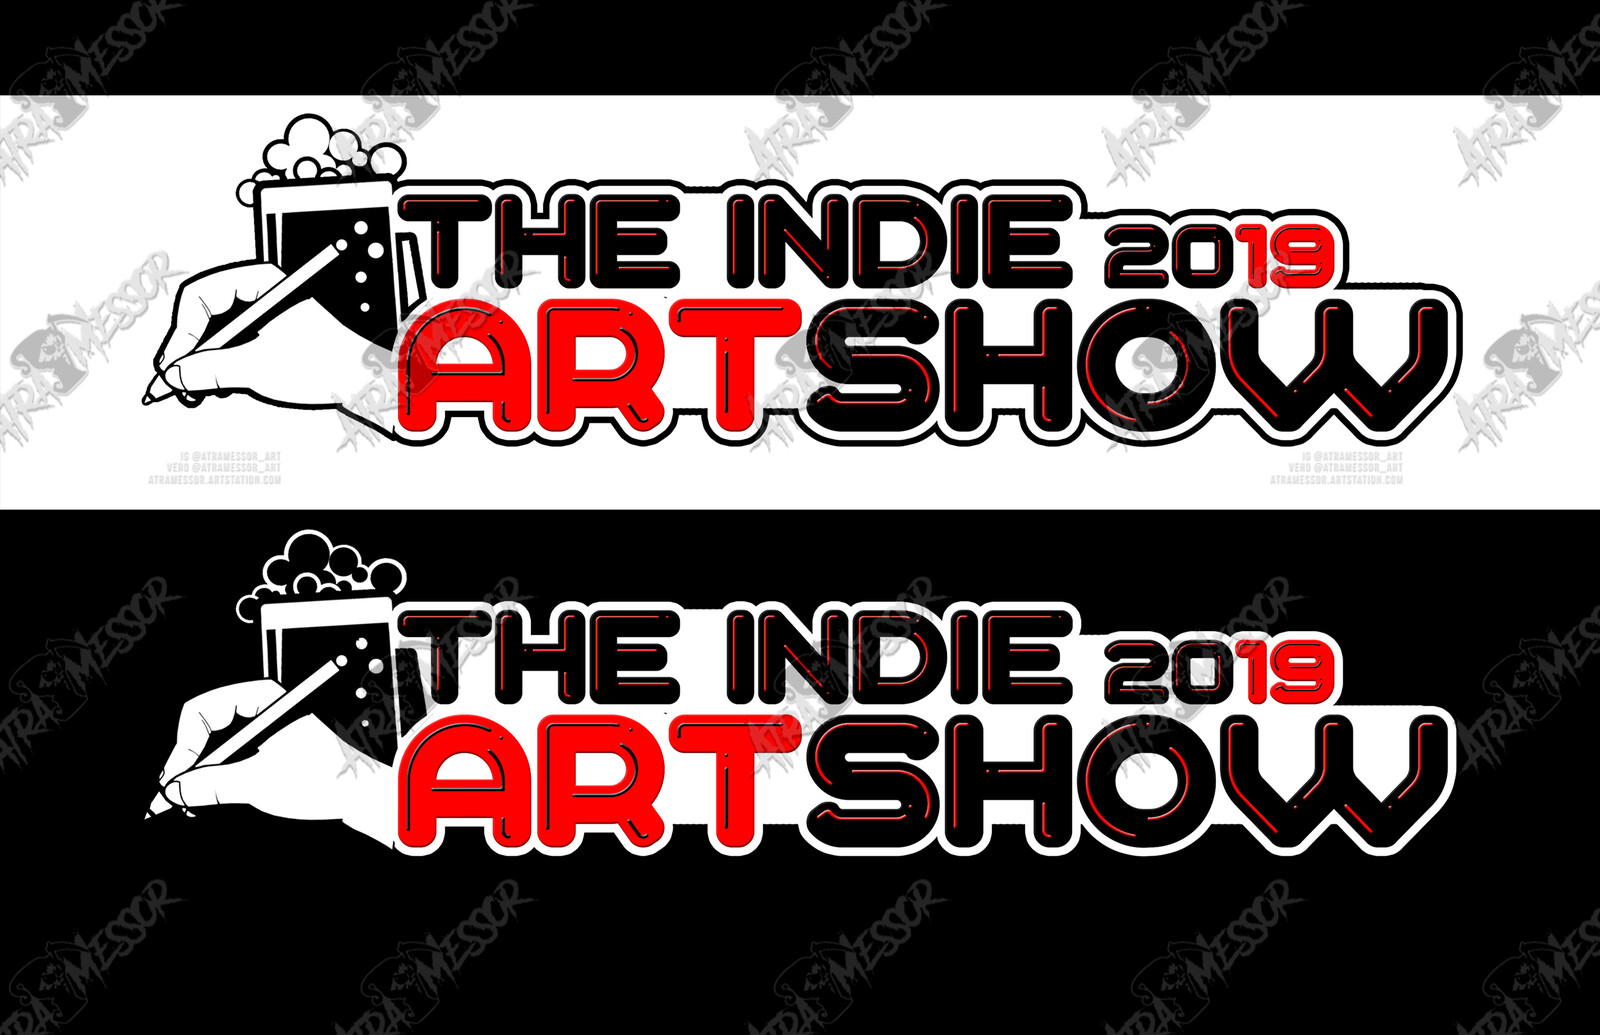 Indie Artshow Logo
(commission)